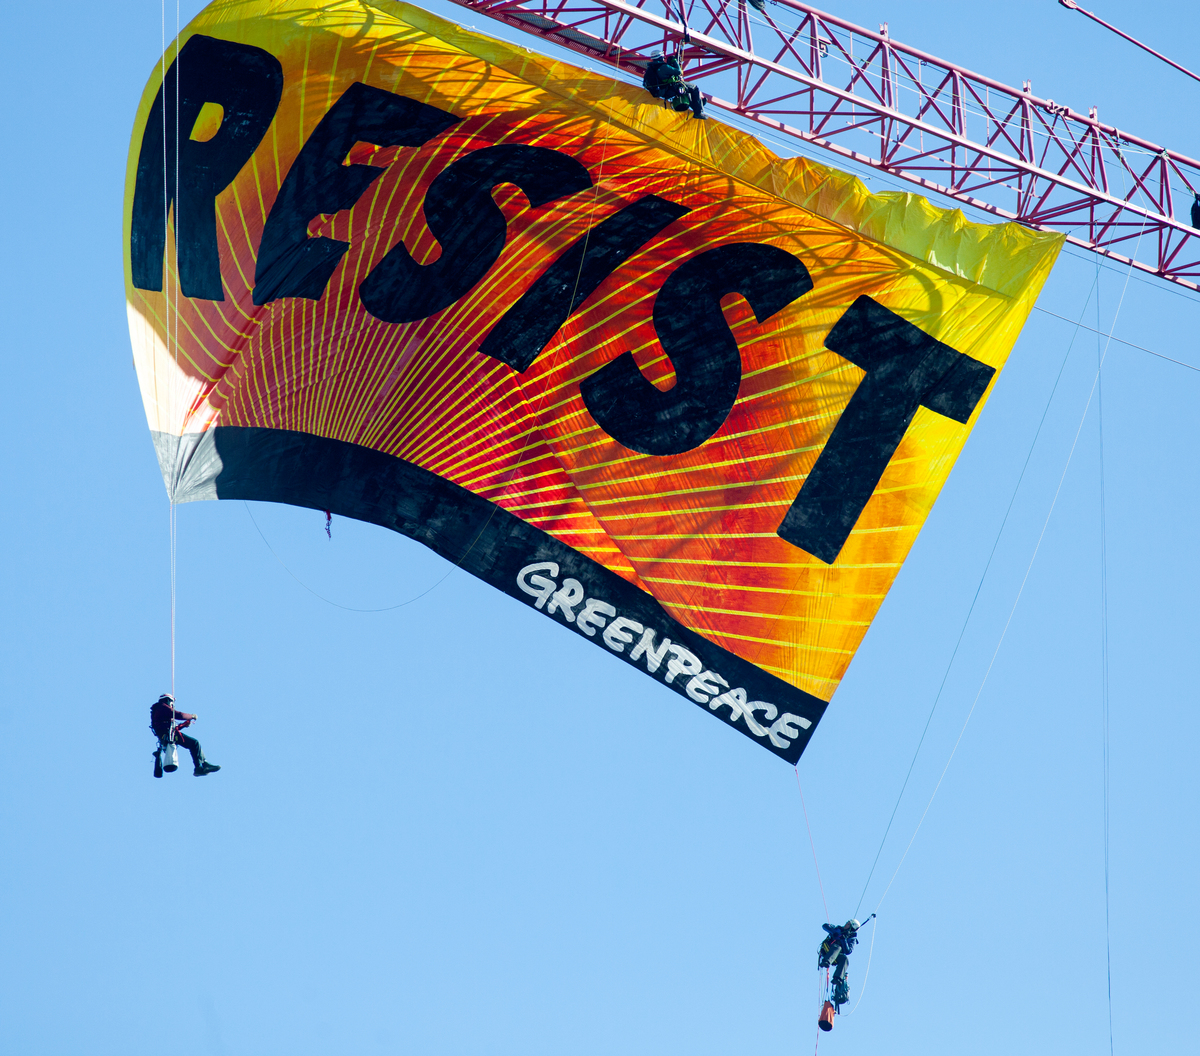 Resist Banner Hangs Message For Trump White House. © Kate Davison / Greenpeace